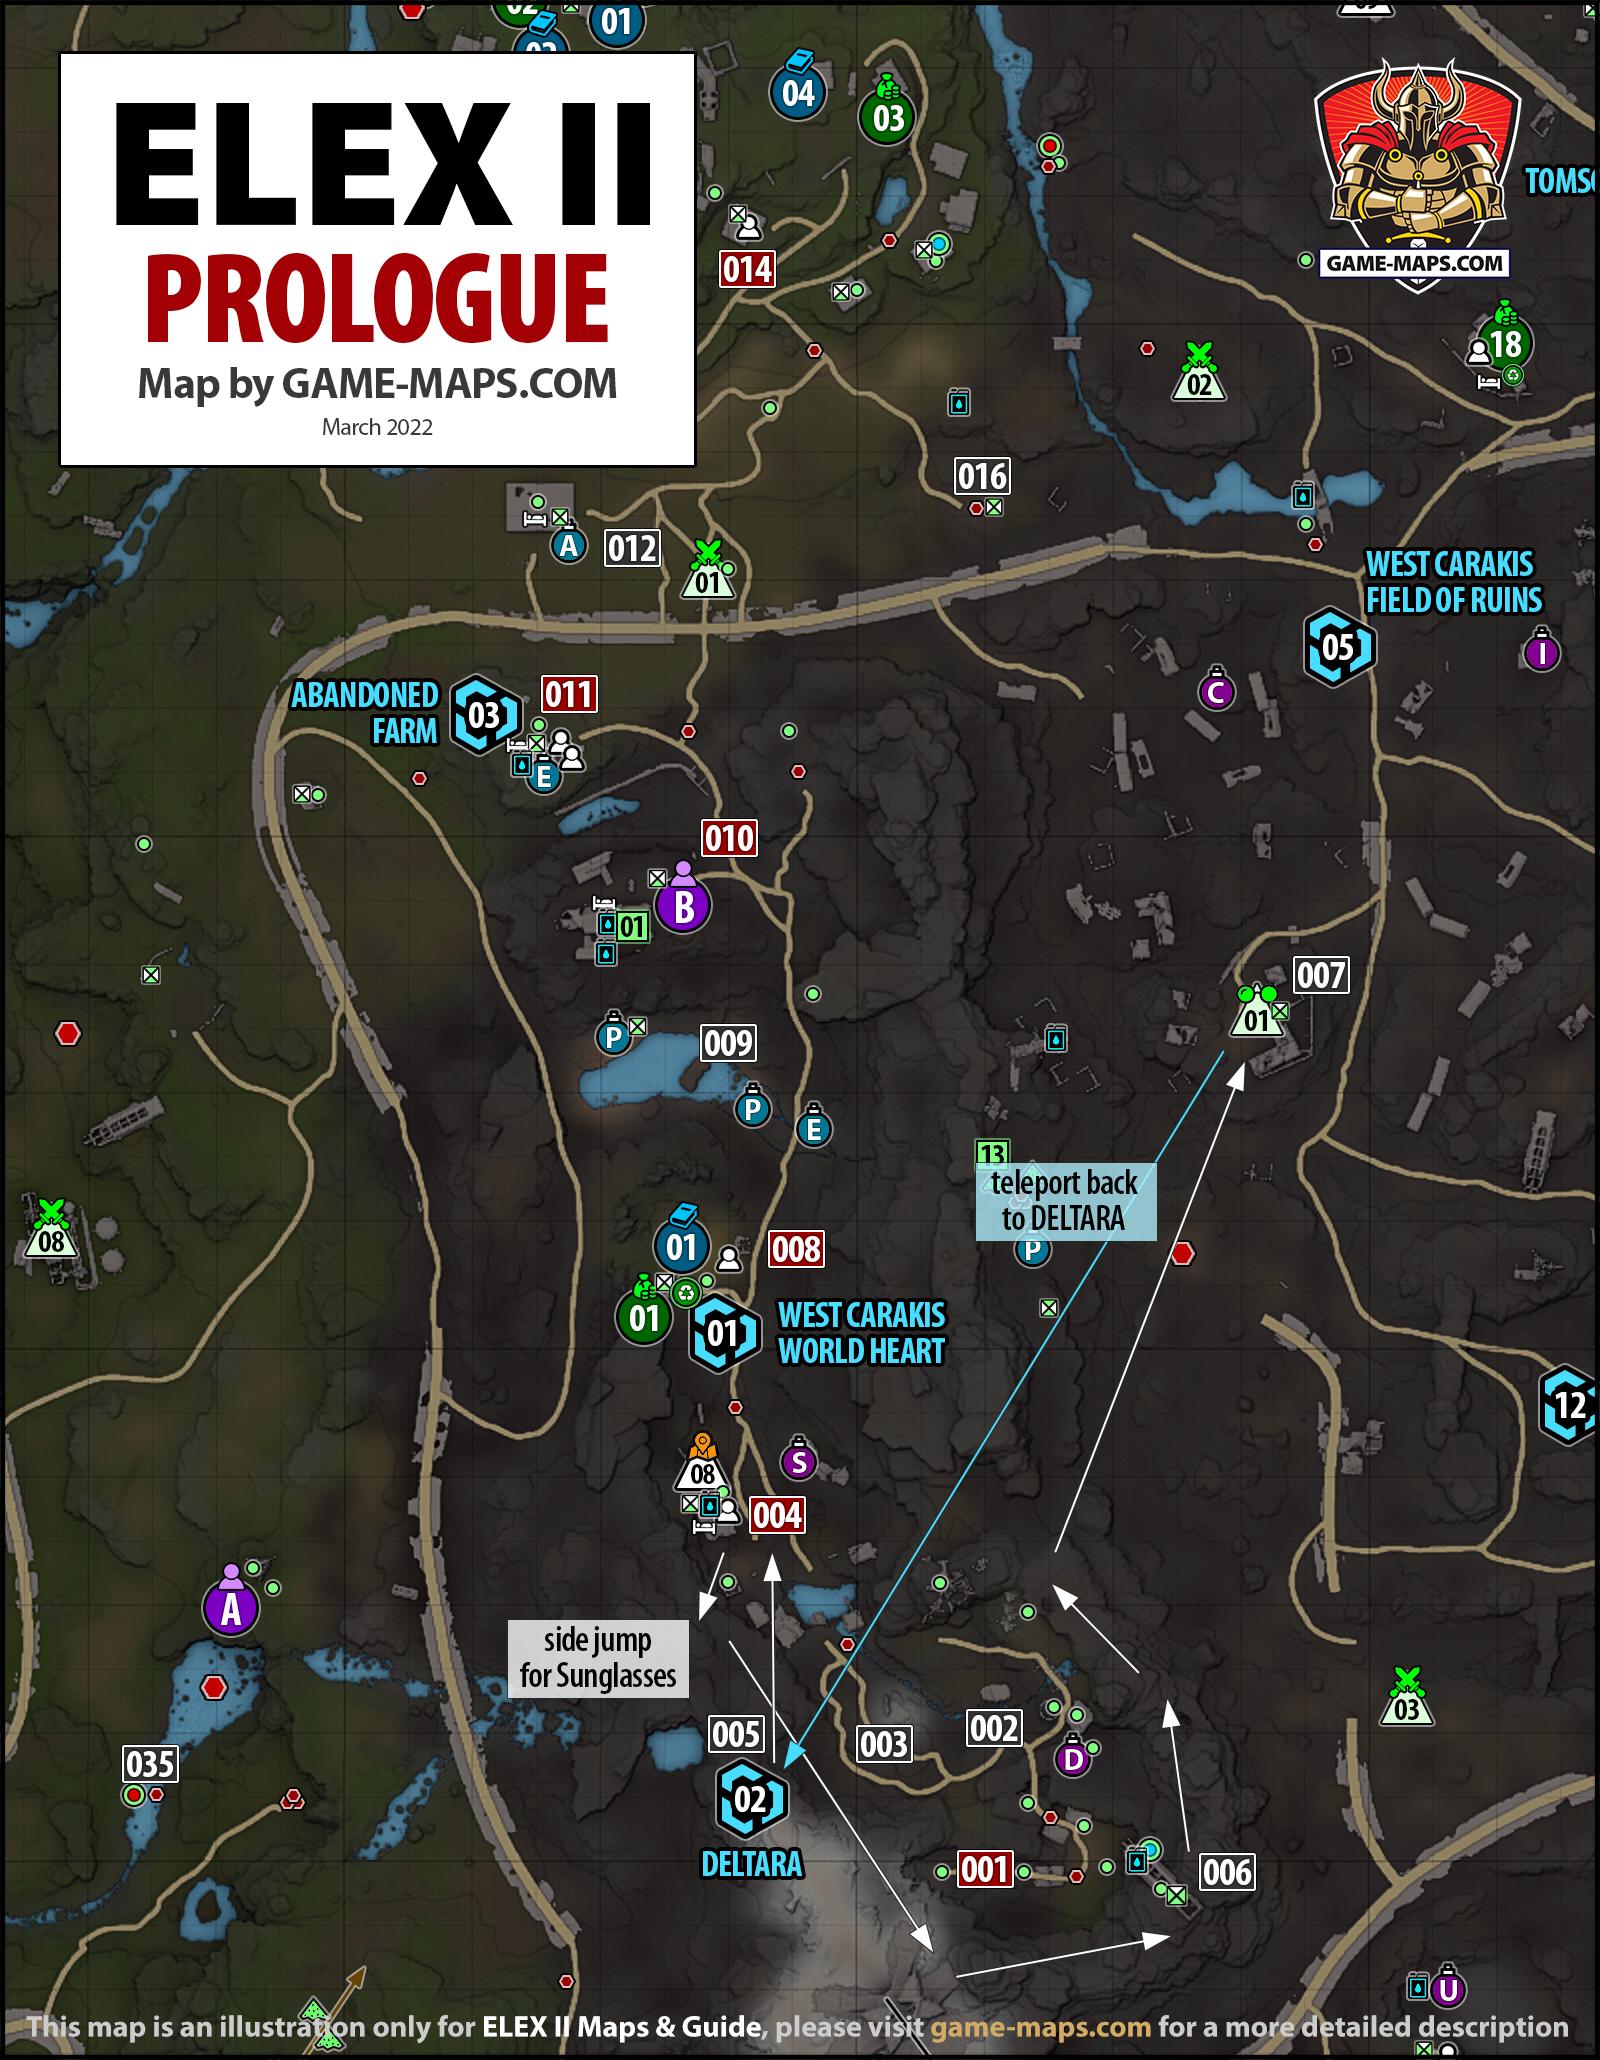 Prologue Map for ELEX II